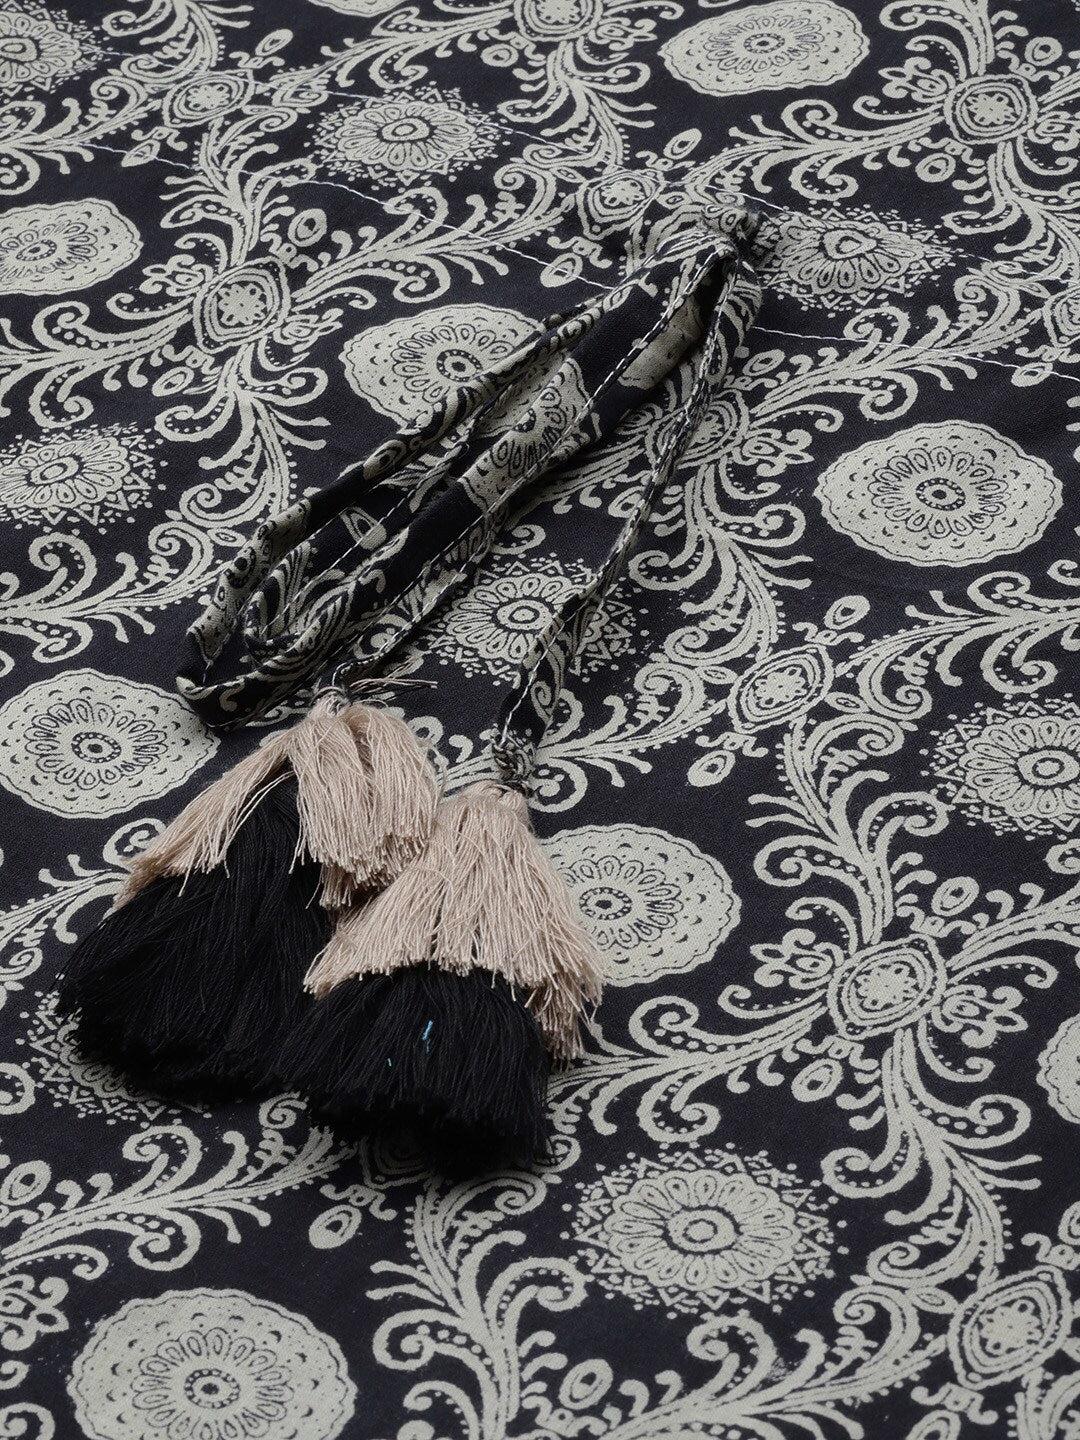 black-ethnic-motifs-printed-caftan-10121049BK, Women Clothing, Cotton Caftan